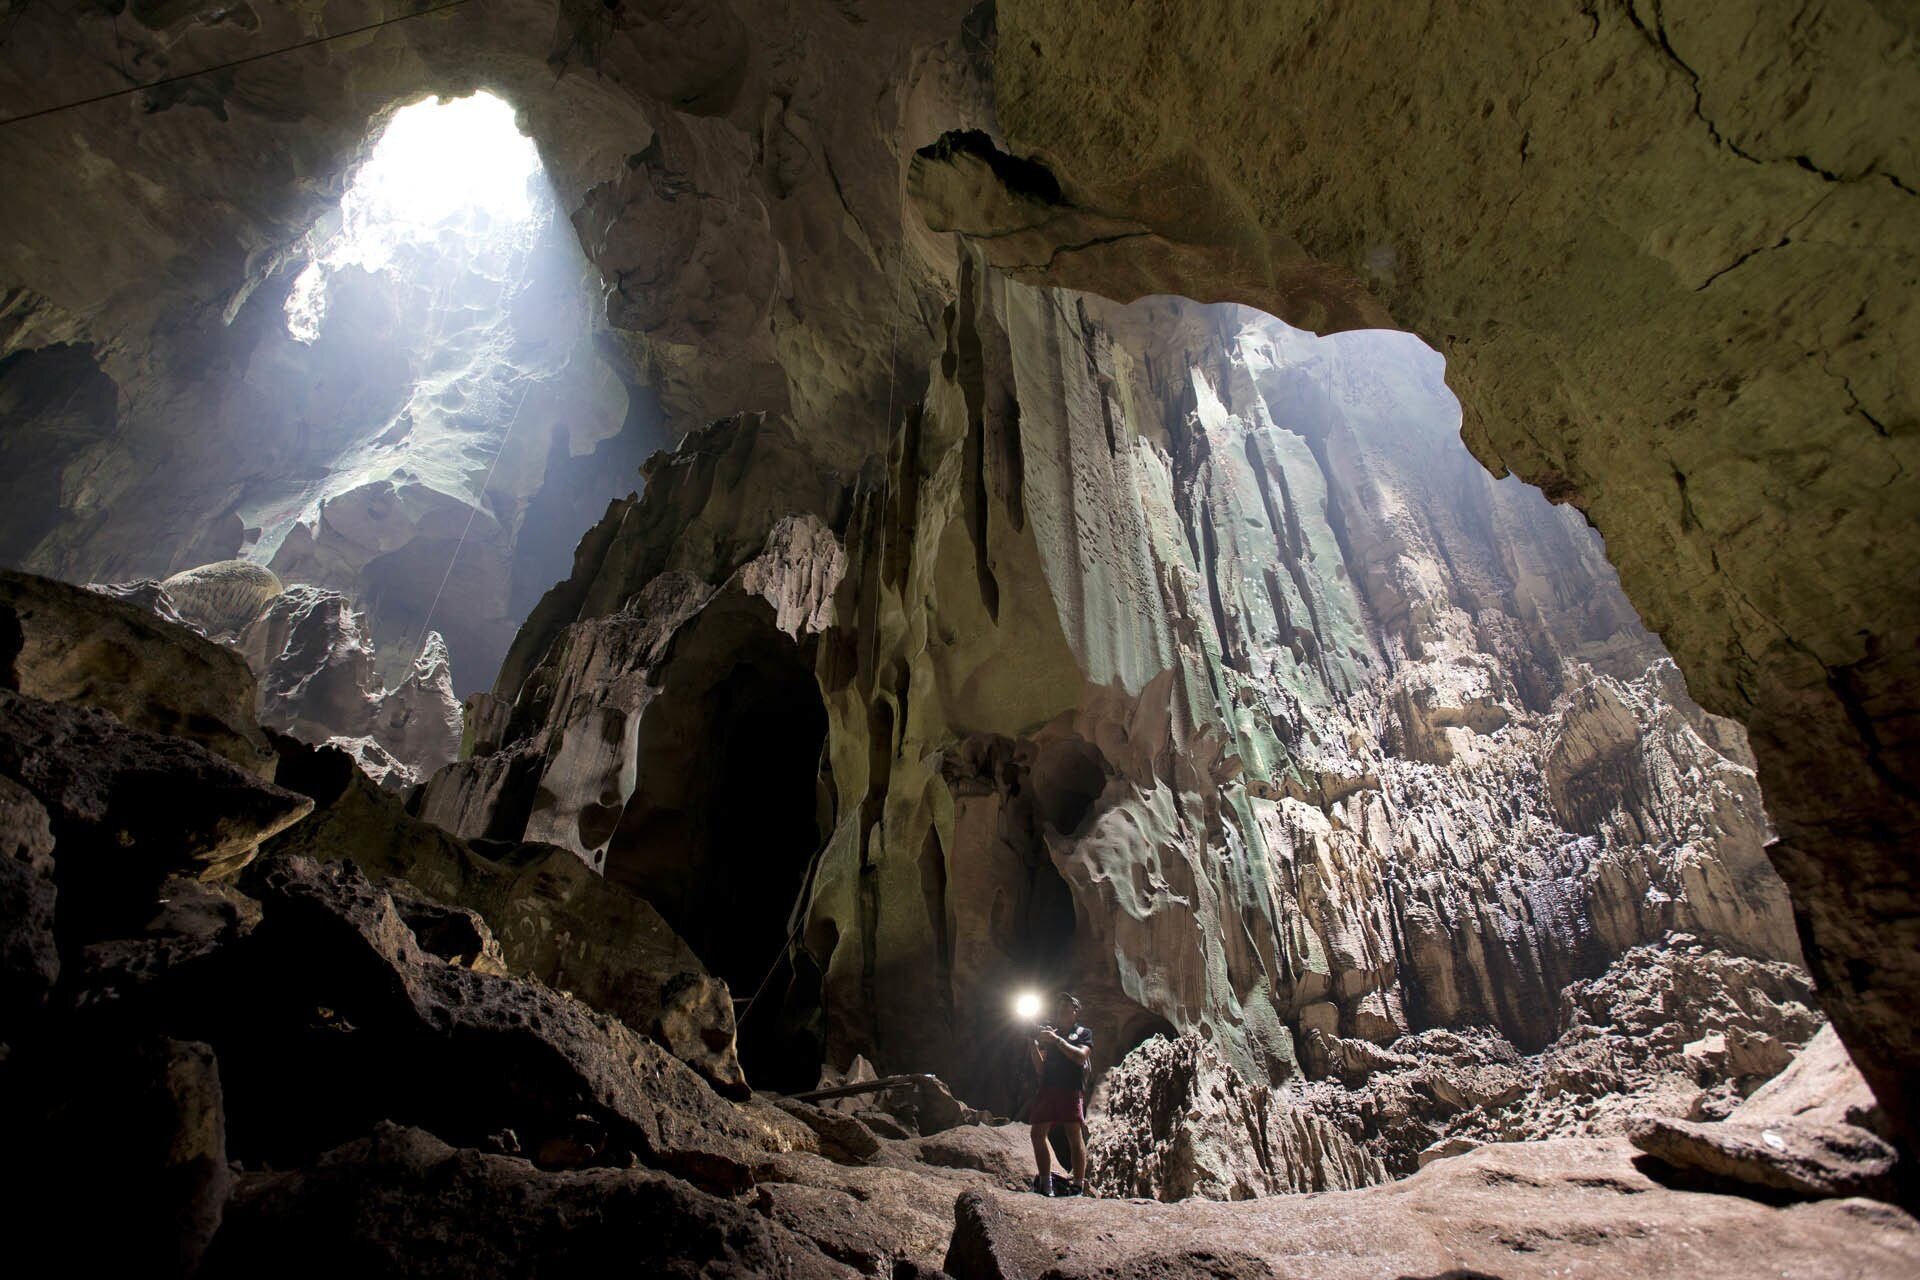 cameraman-filming-in-caves-borneo_37448739870_o-1920w.jpg